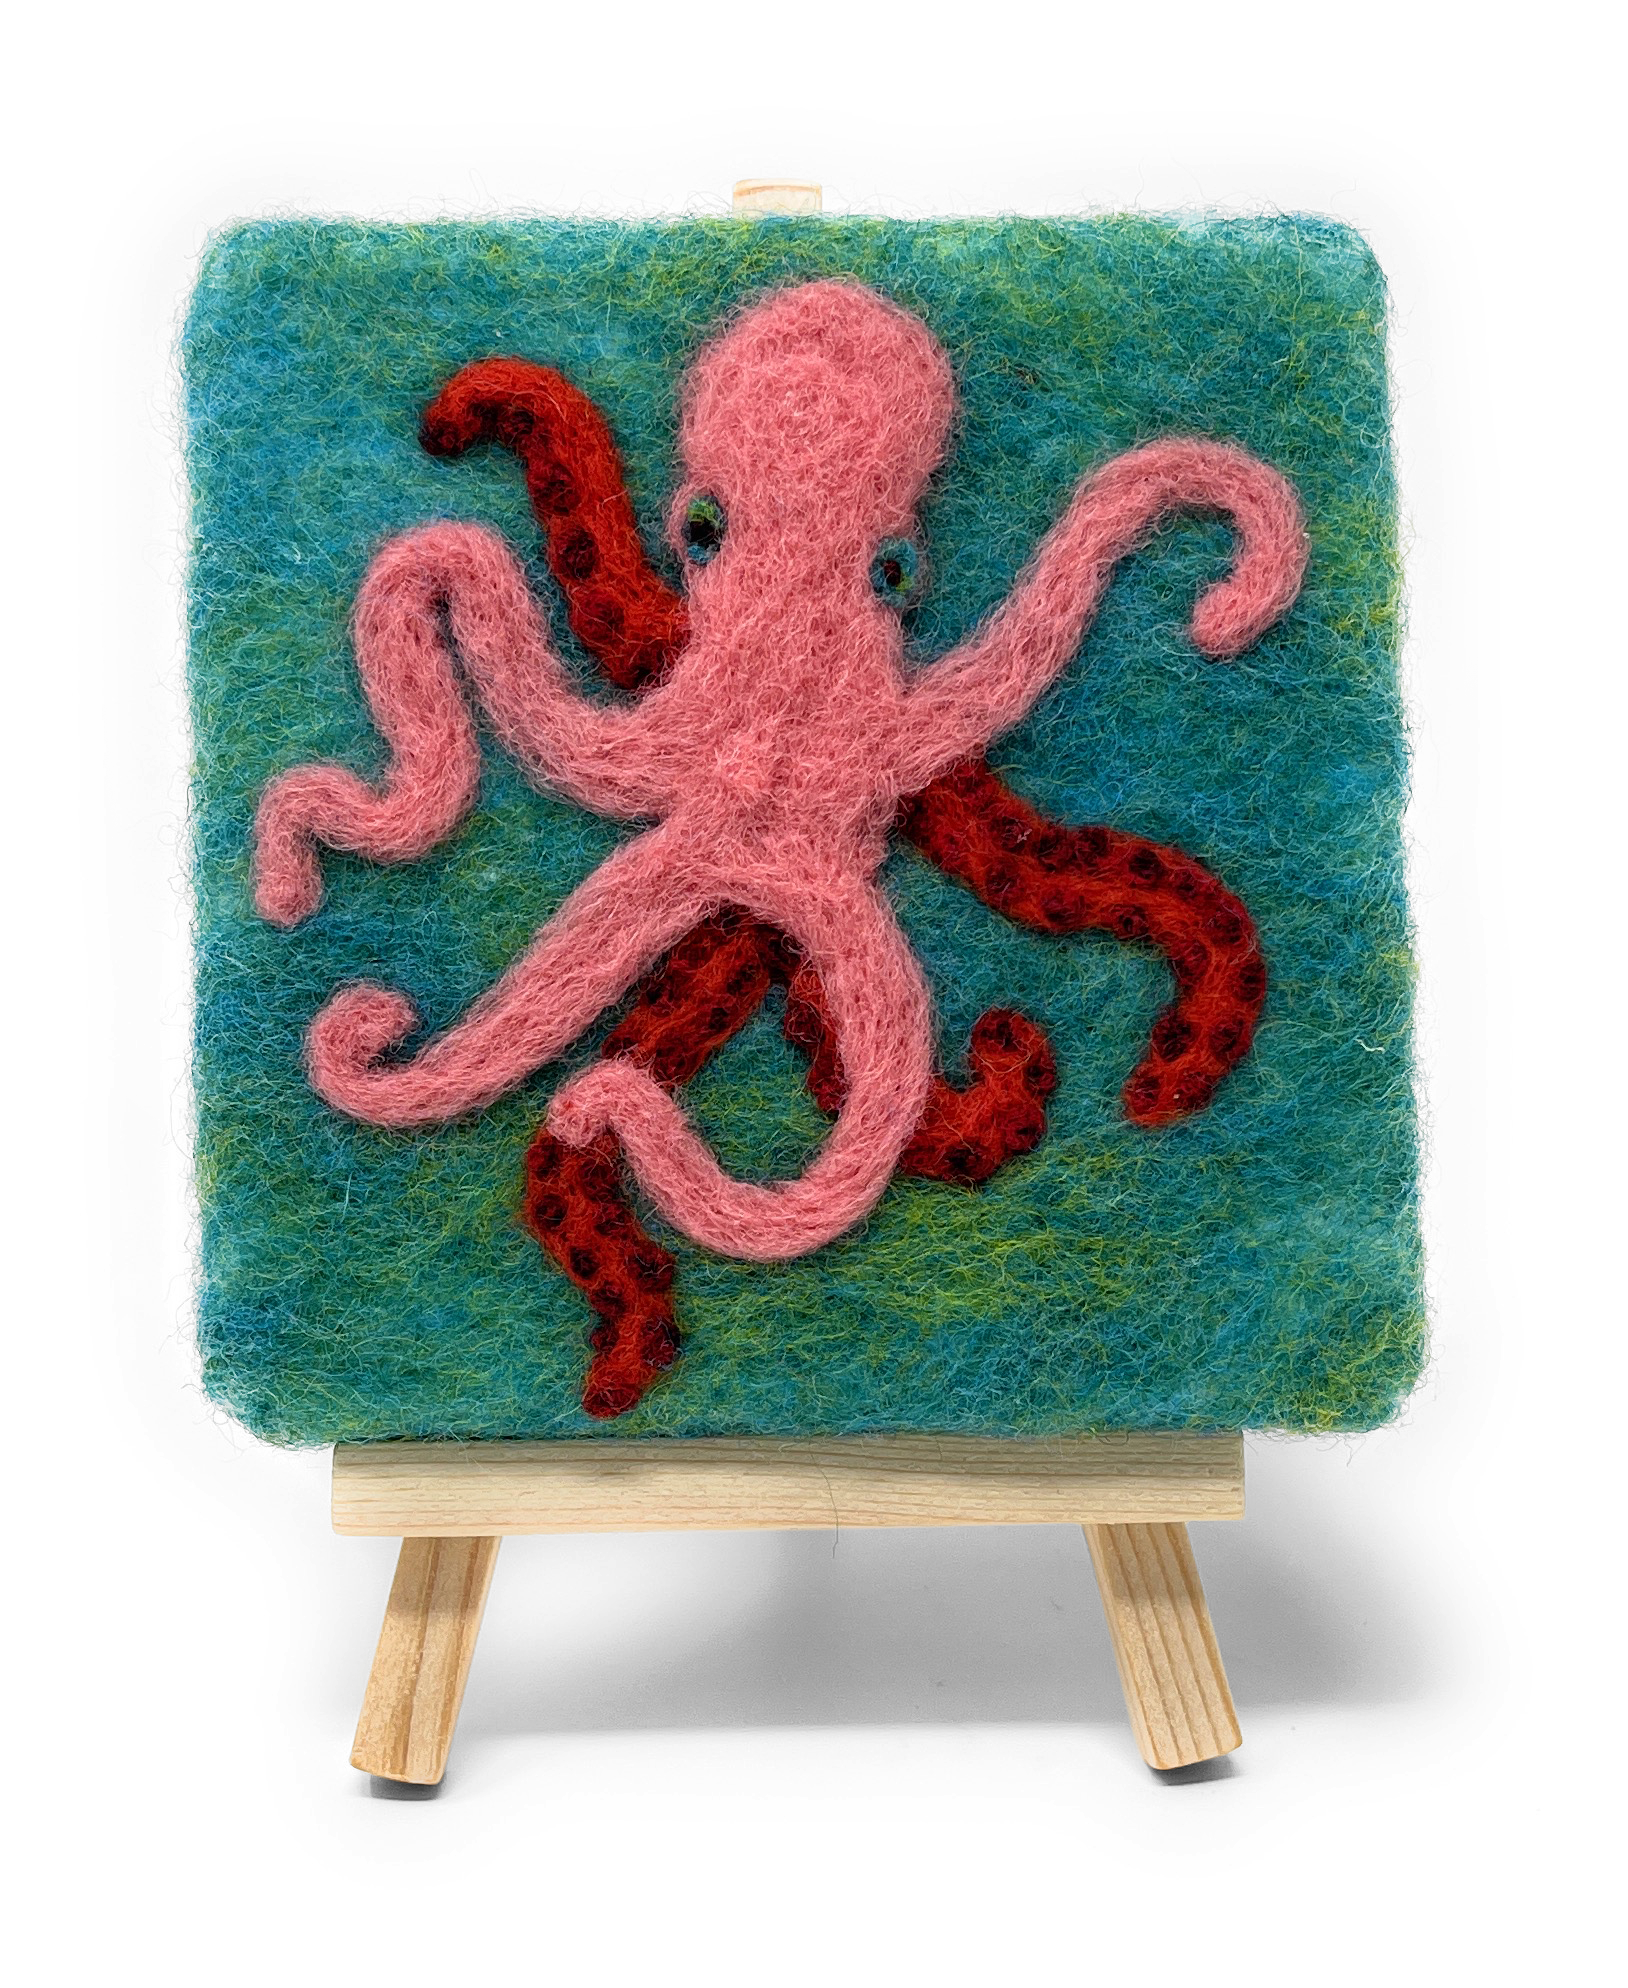 The Crafty Kit Company - Under the Sea Octopus Needle Felting Kit